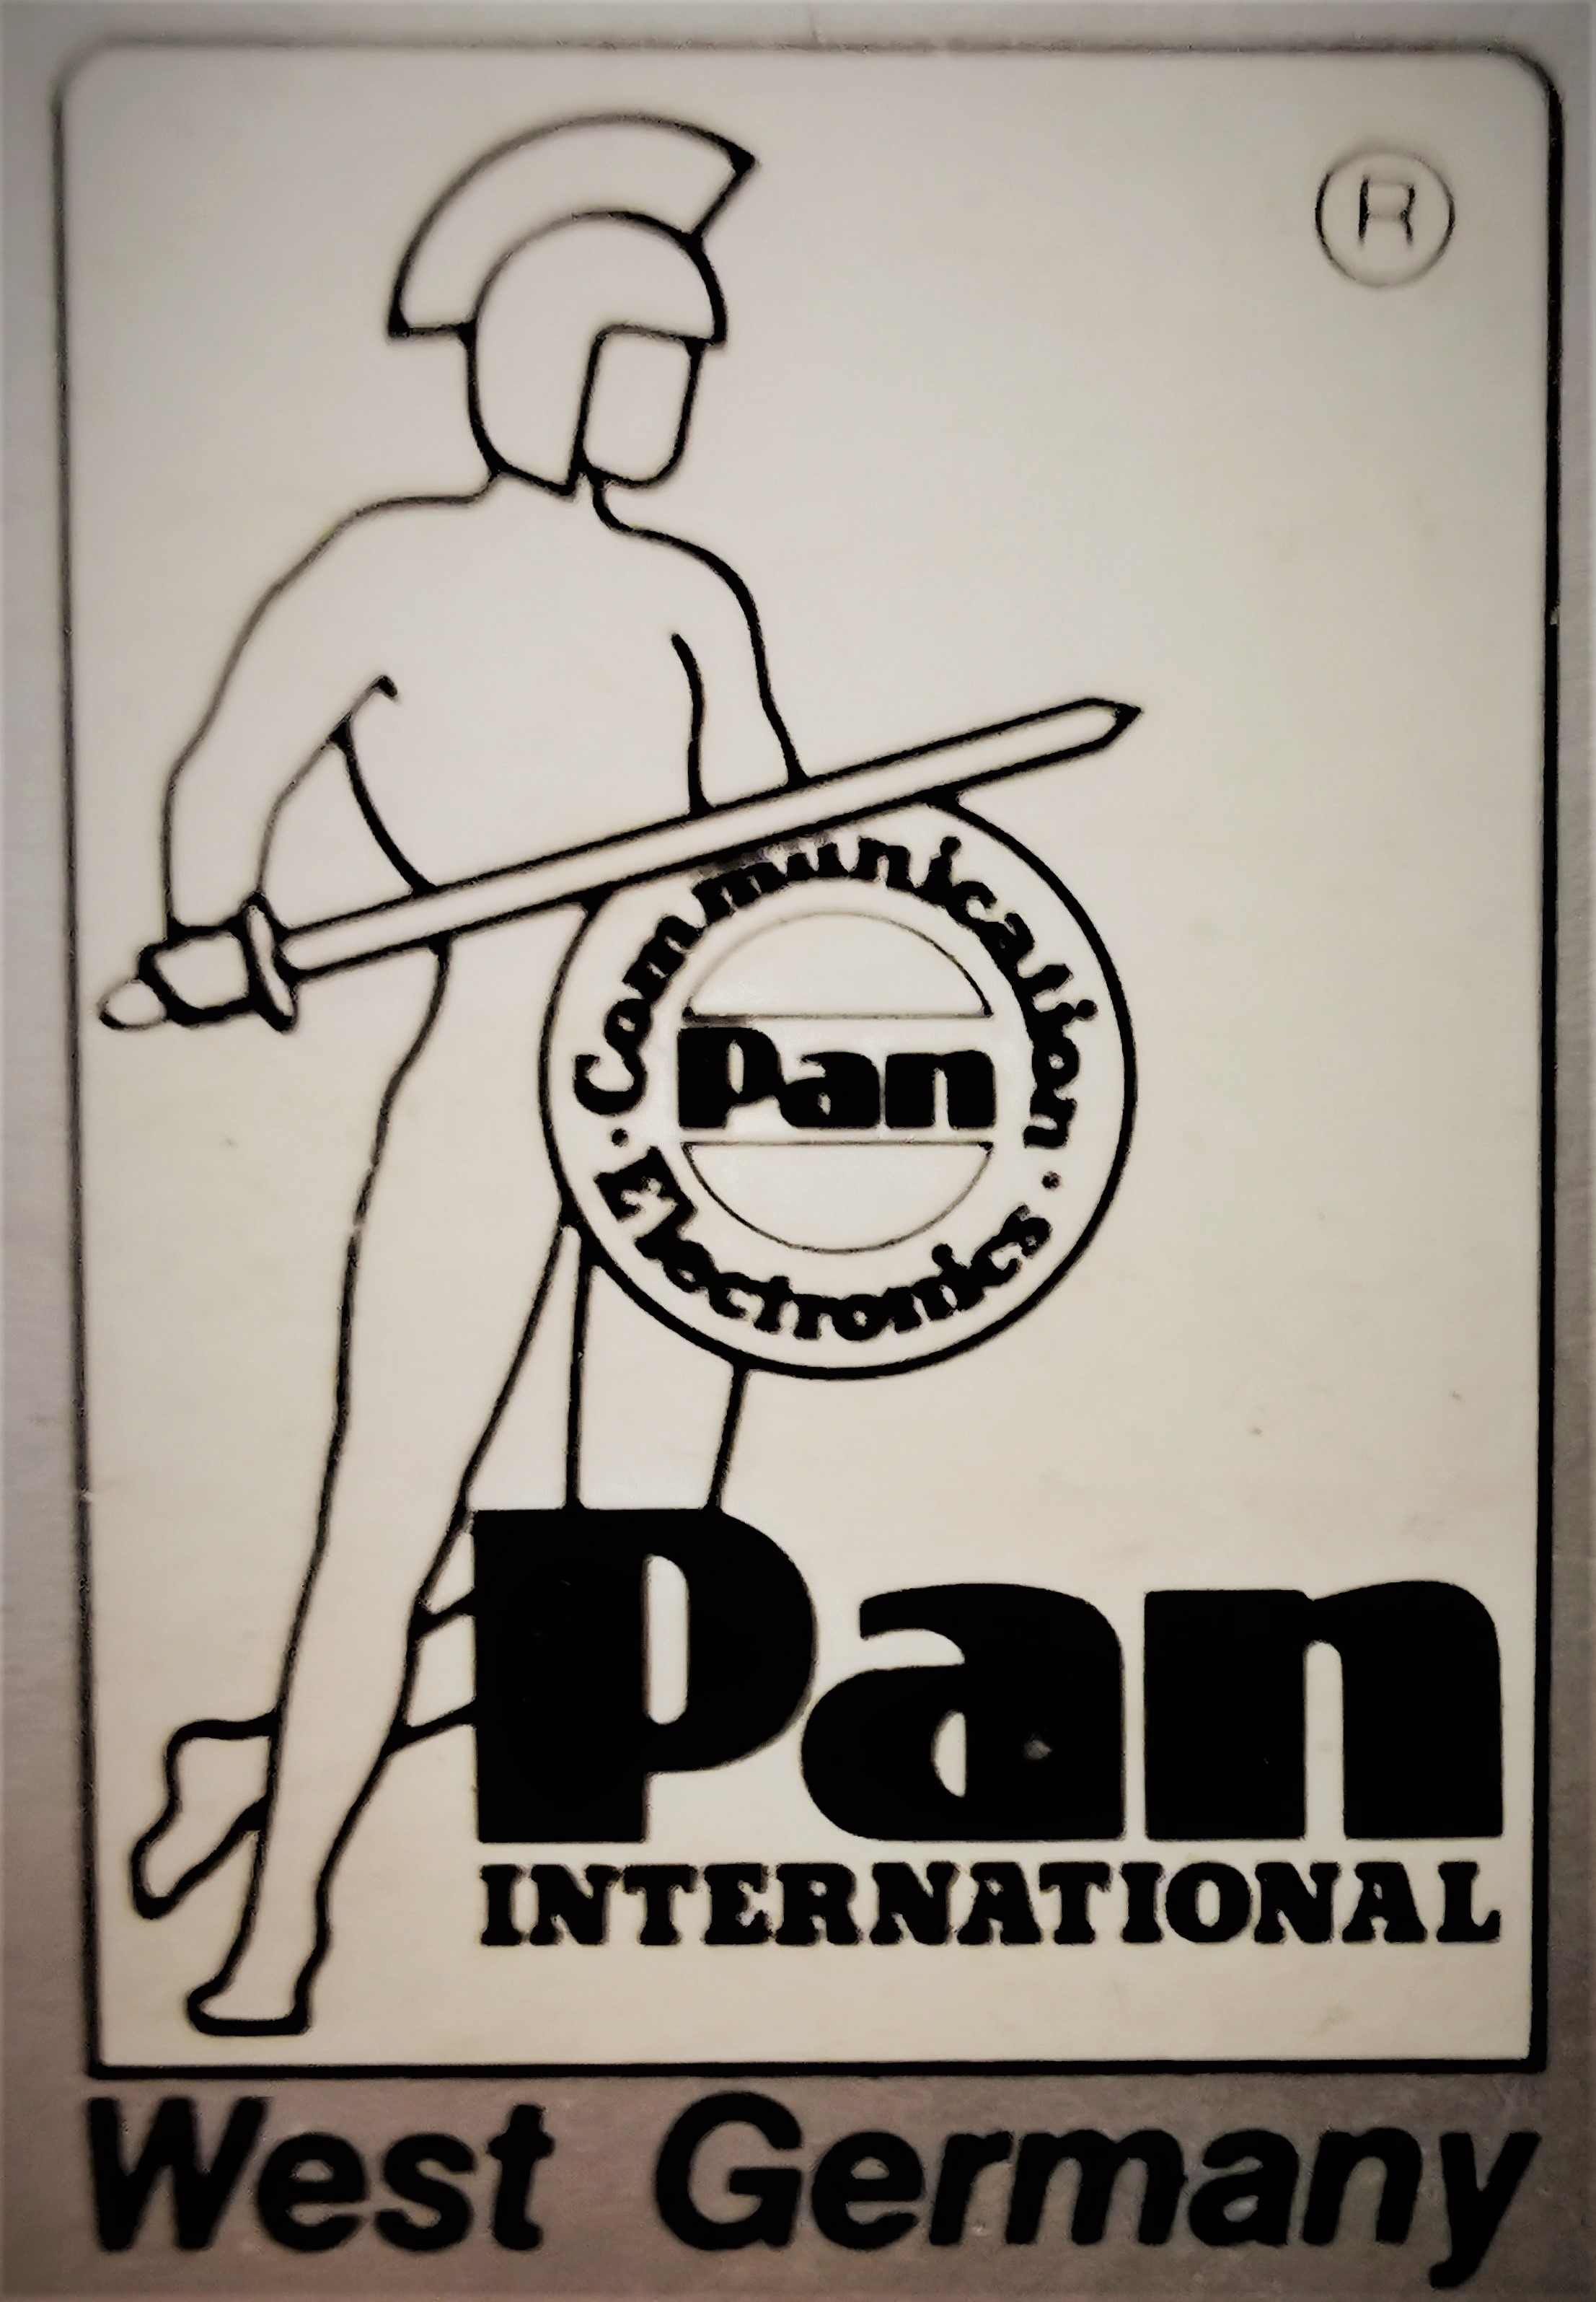 PAN 